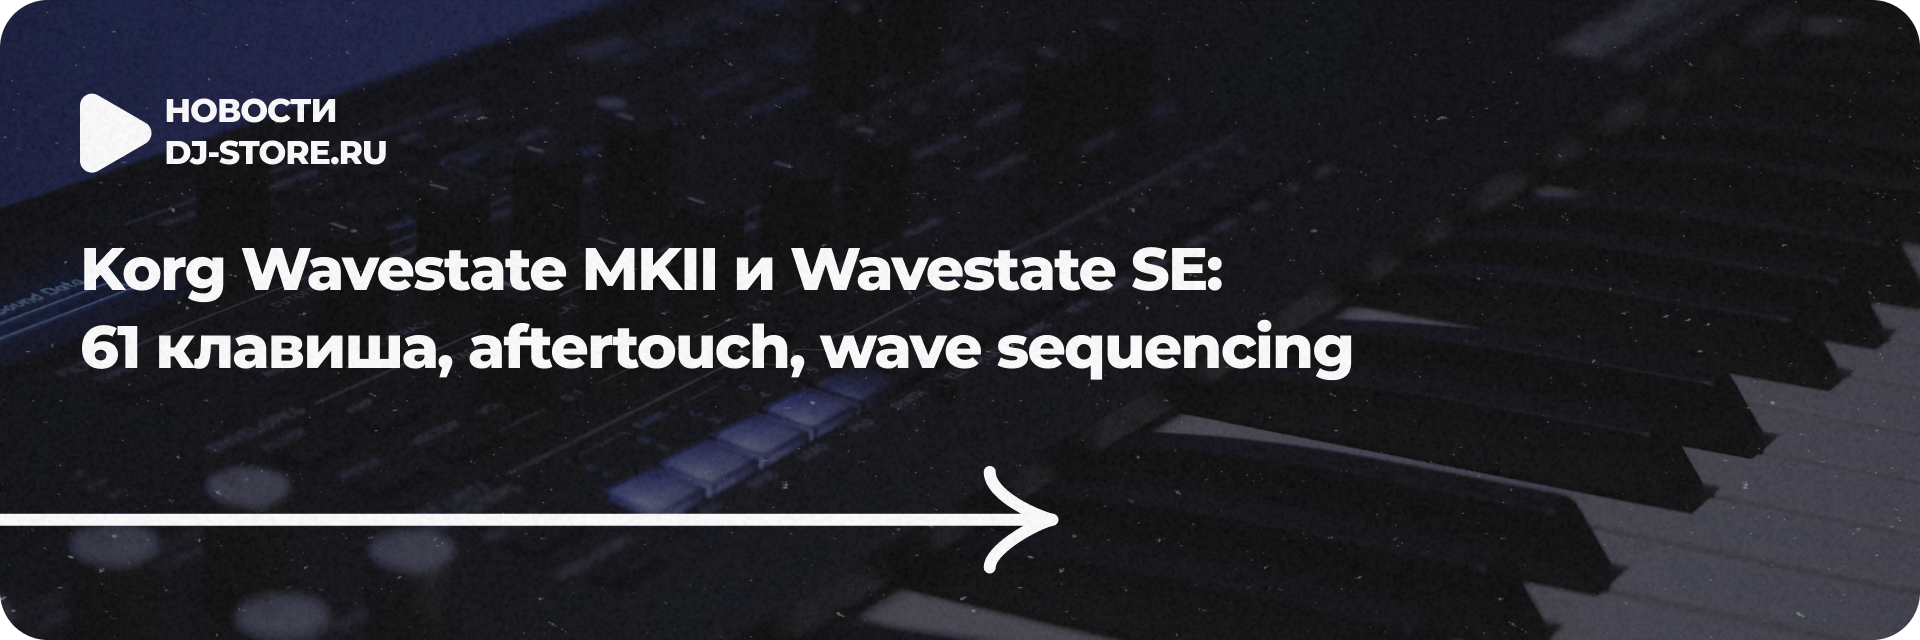 Korg Wavestate MKII и Wavestate SE